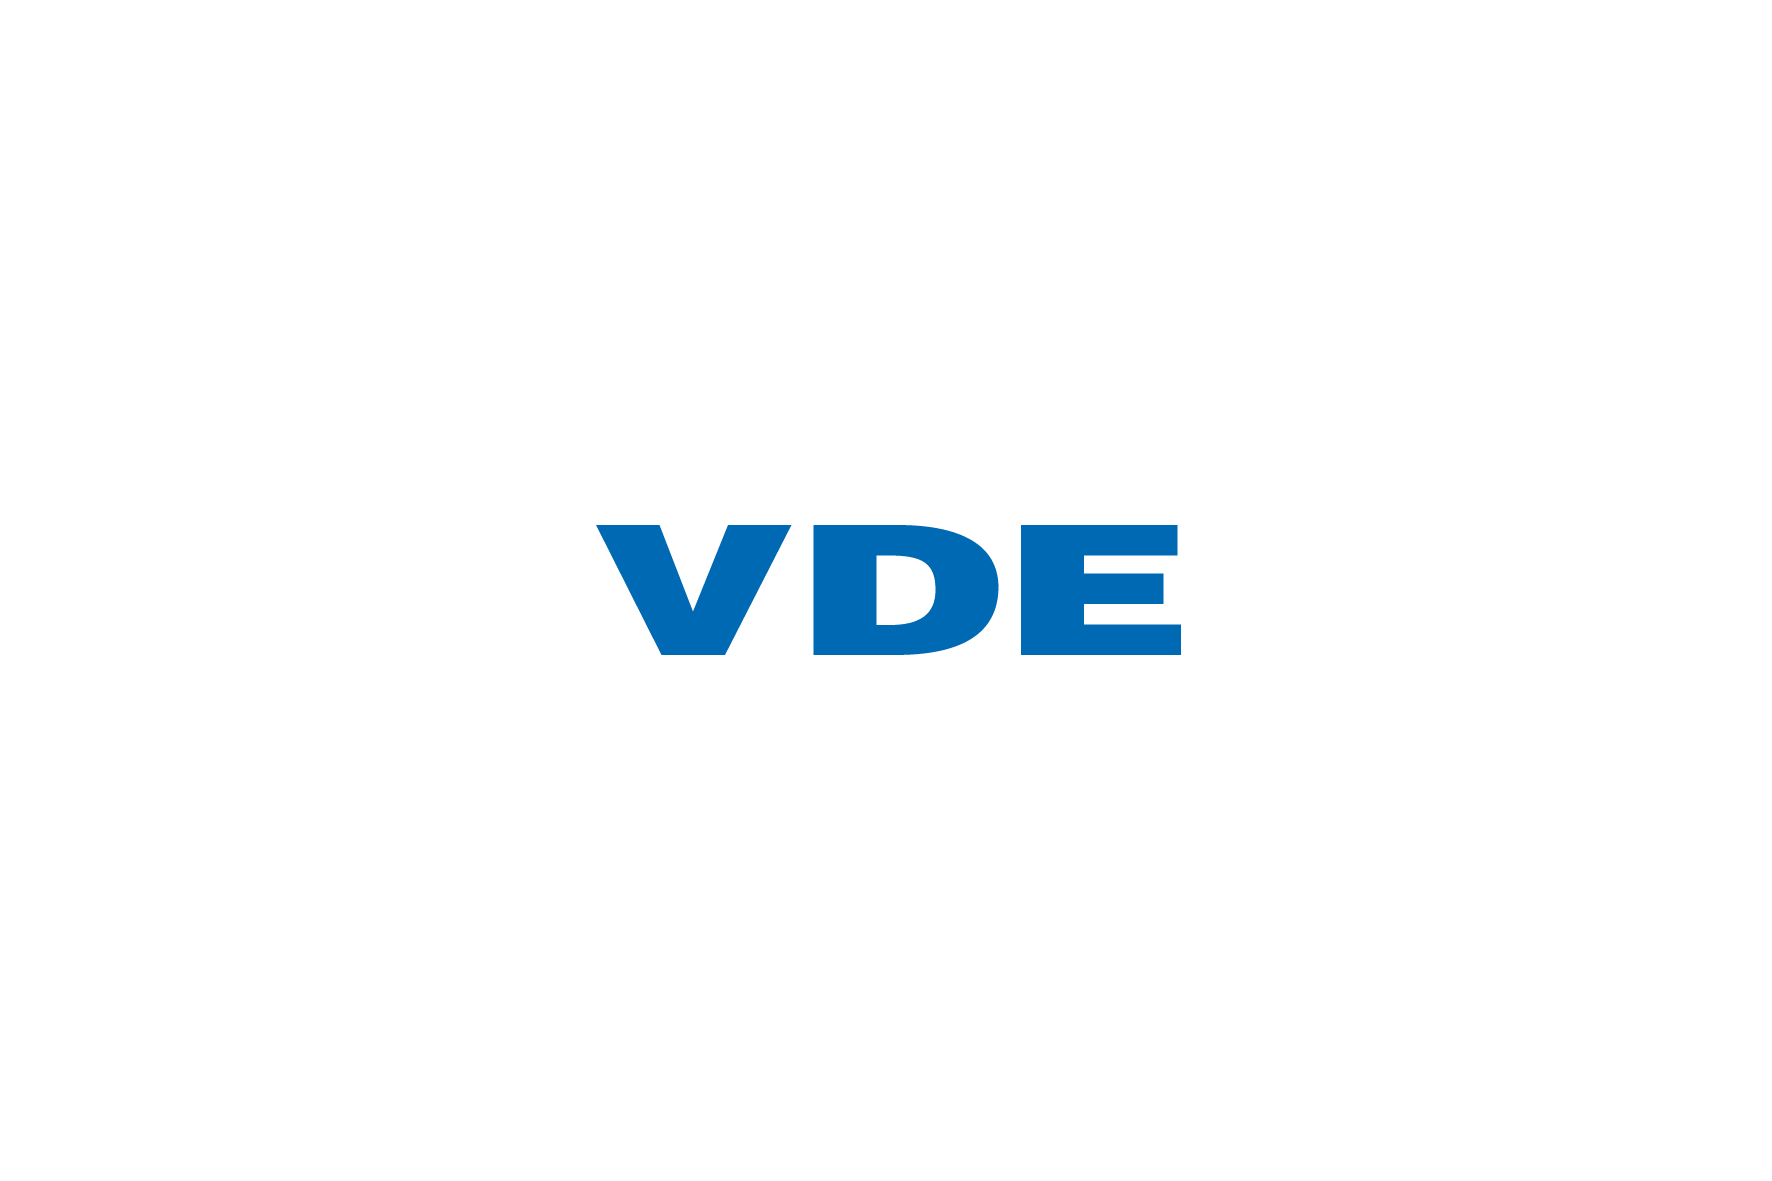 m2g - VDE - Global Services Korea